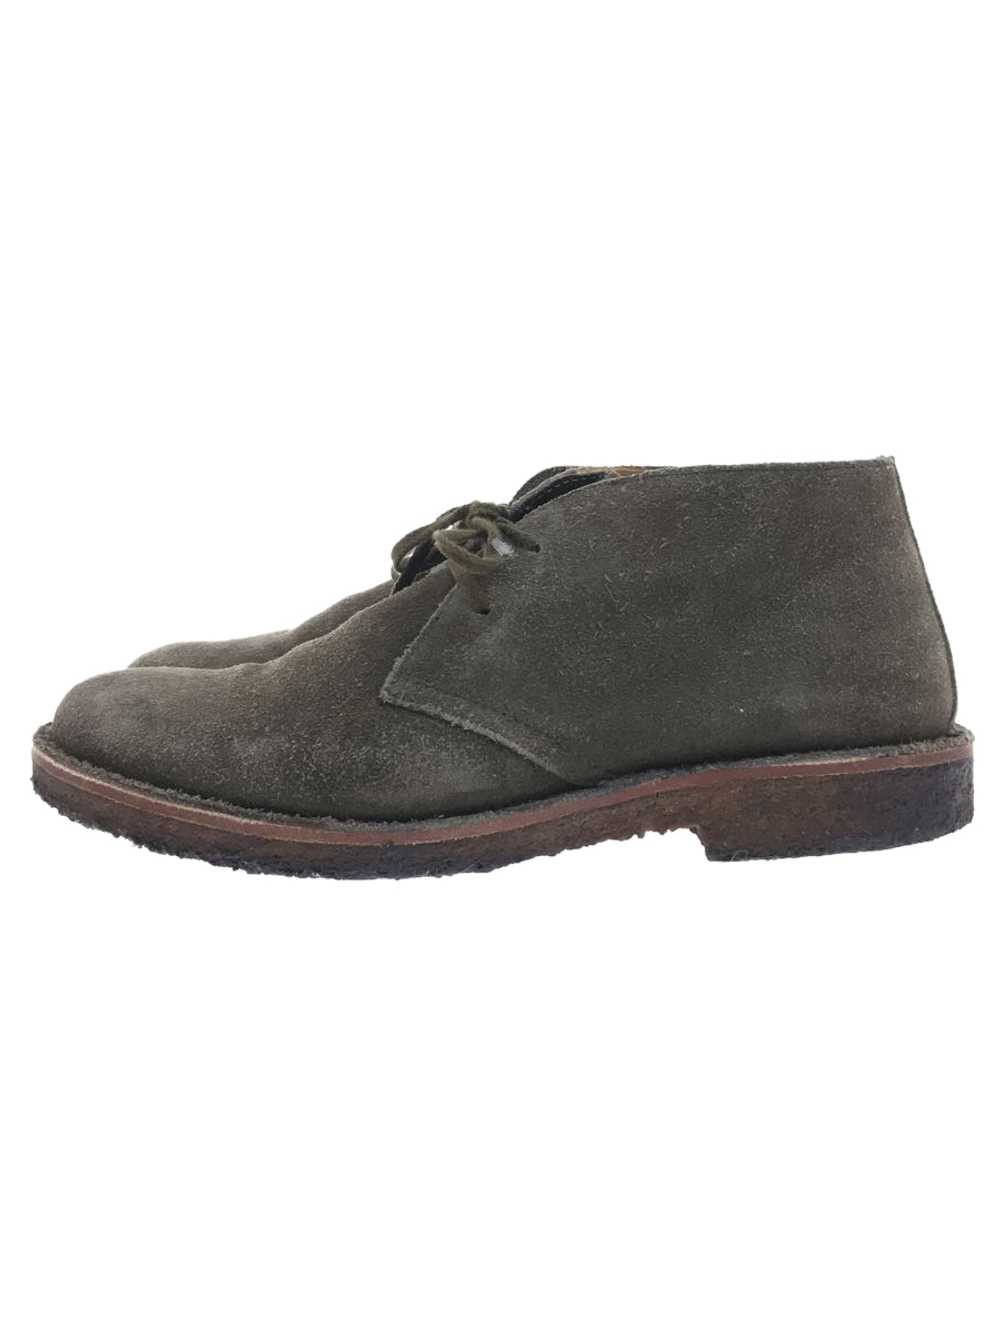 Astorflex Boots/43/Khk/Suede Shoes BYH69 - image 1